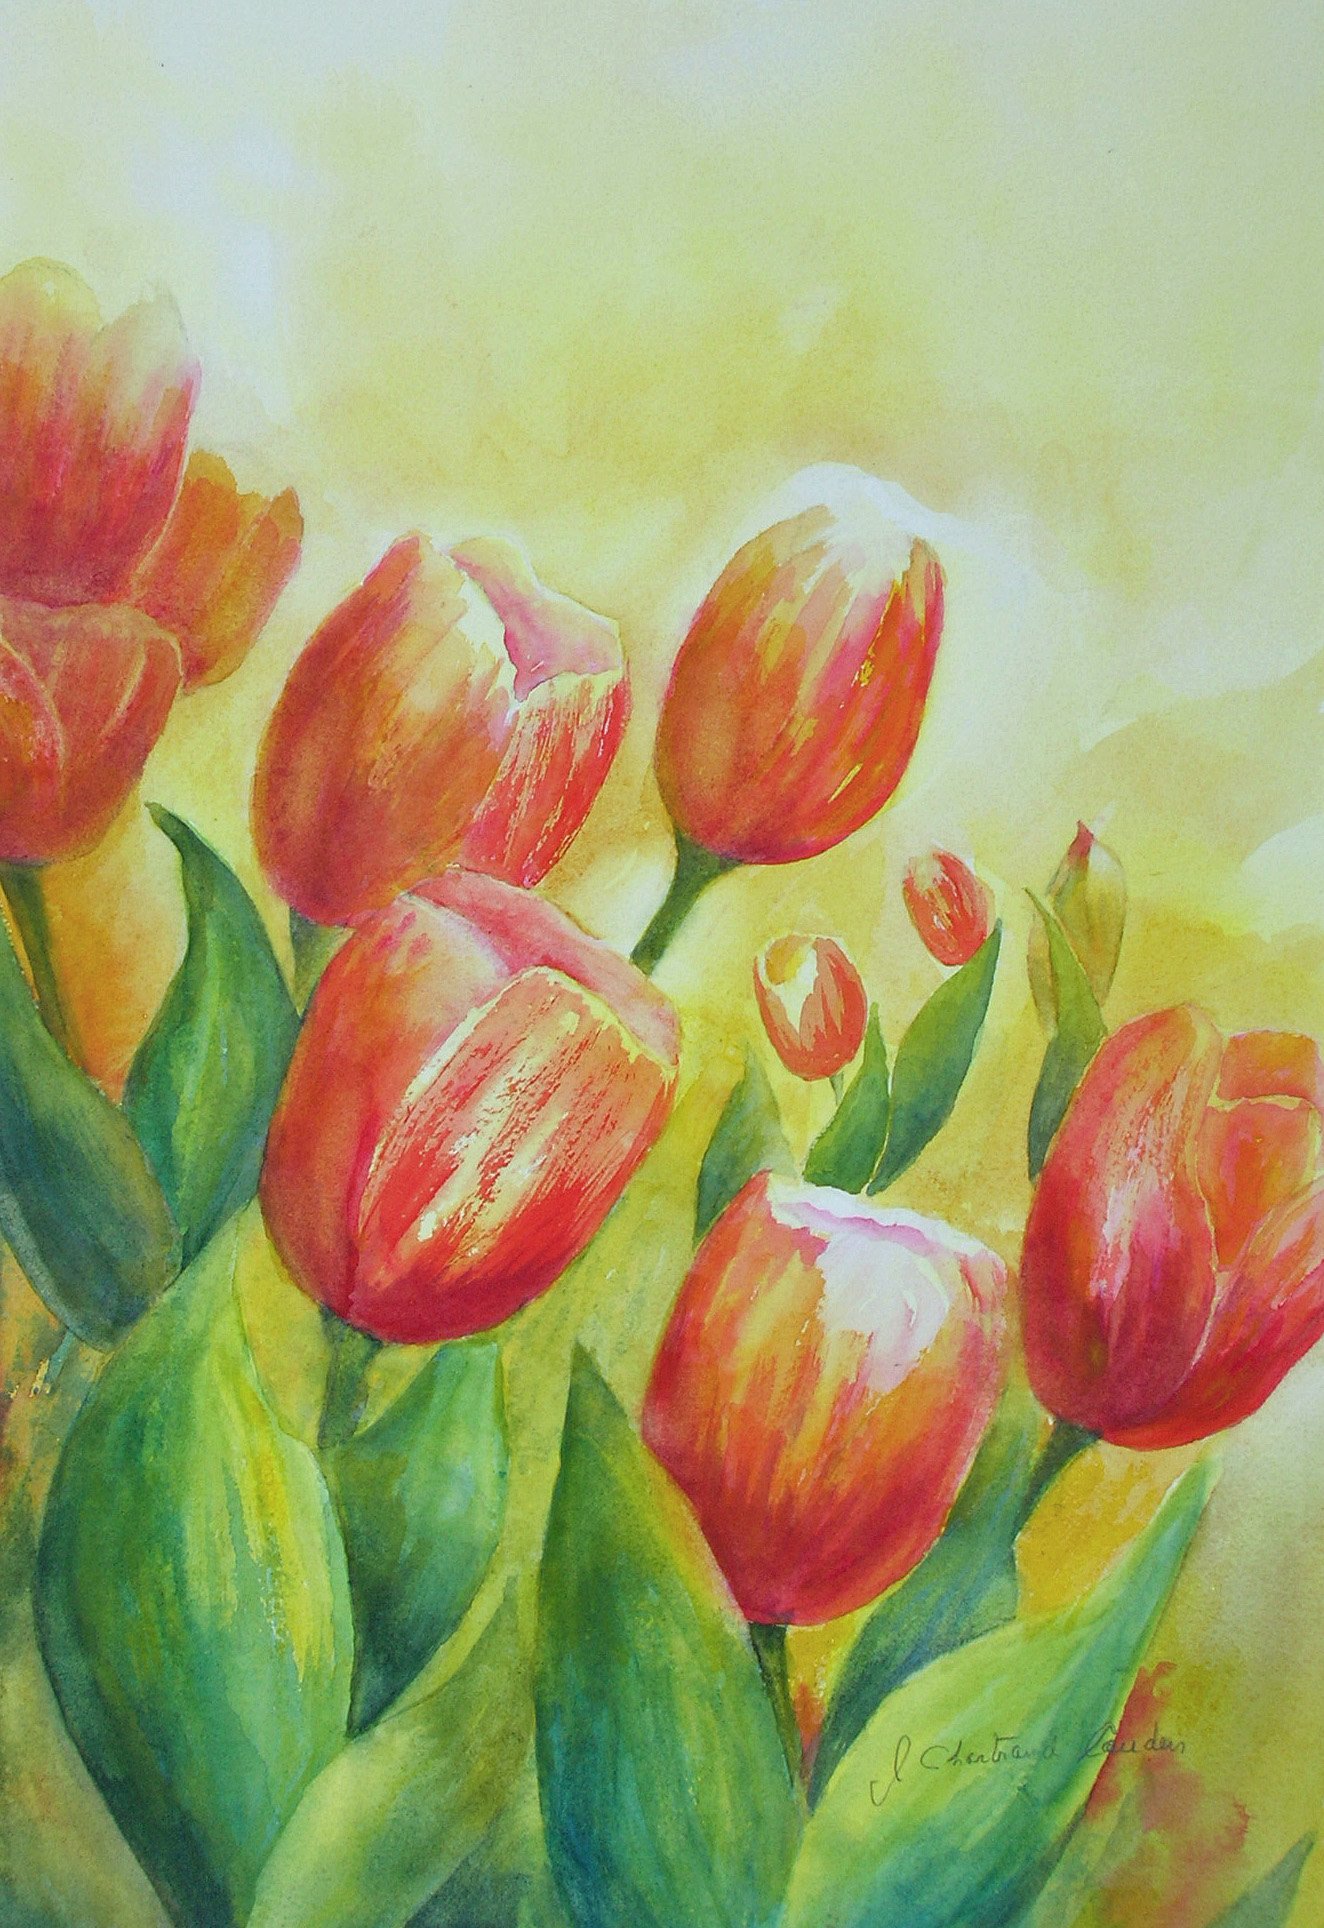 Les tulipes
aquarelle 18" x 12"